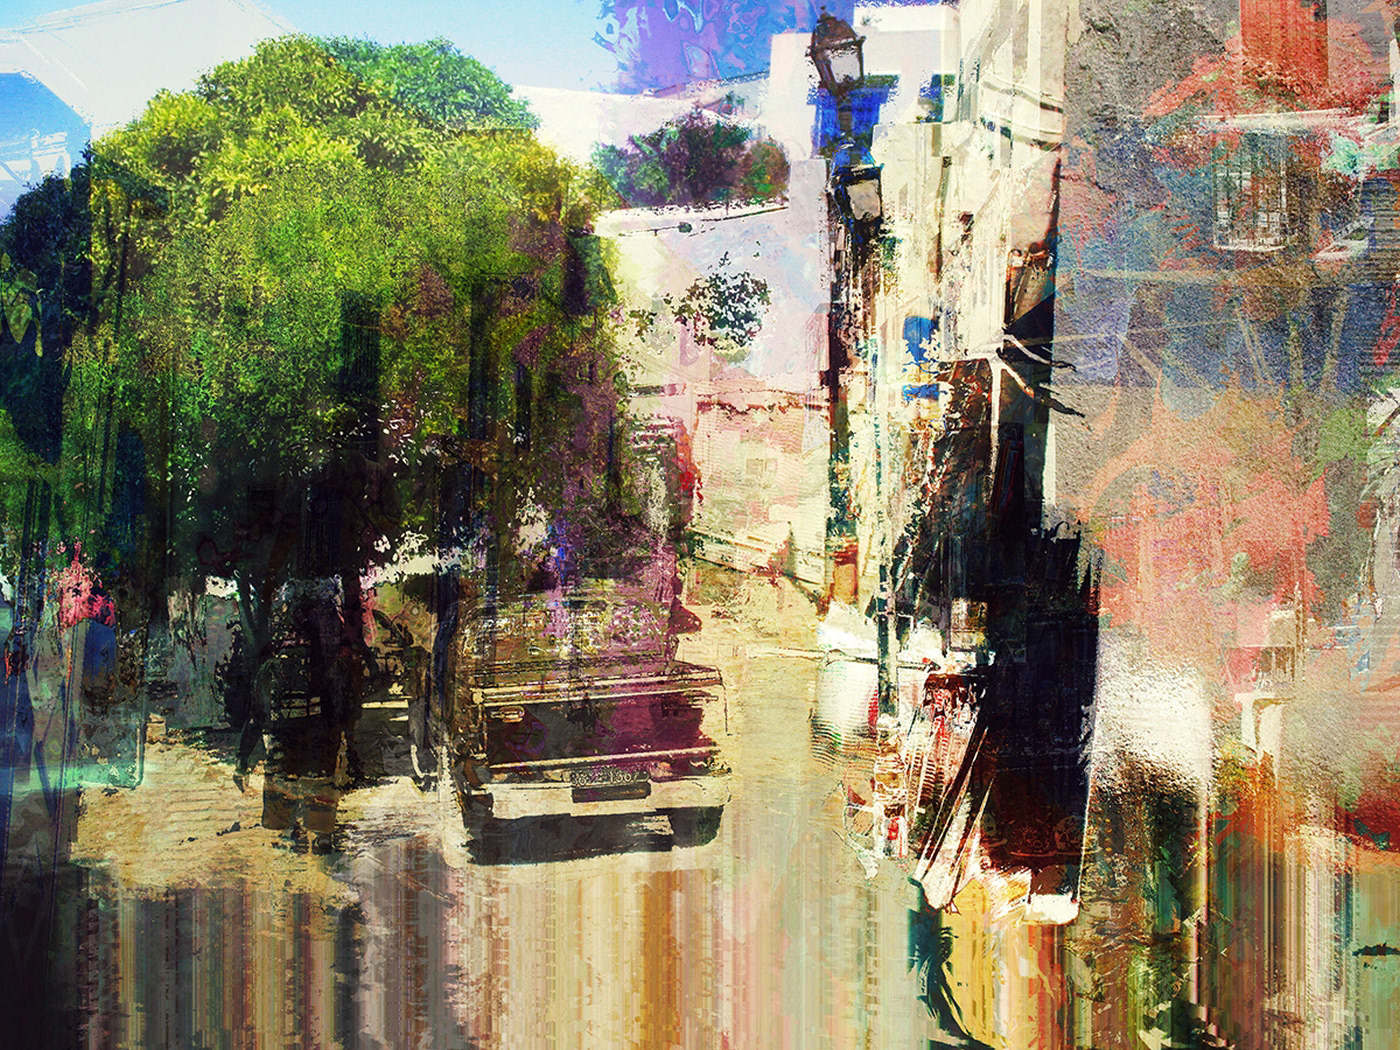 nabeul Sidi Bou Said tunisia distortion pixel experimental Glitch collage filter effect